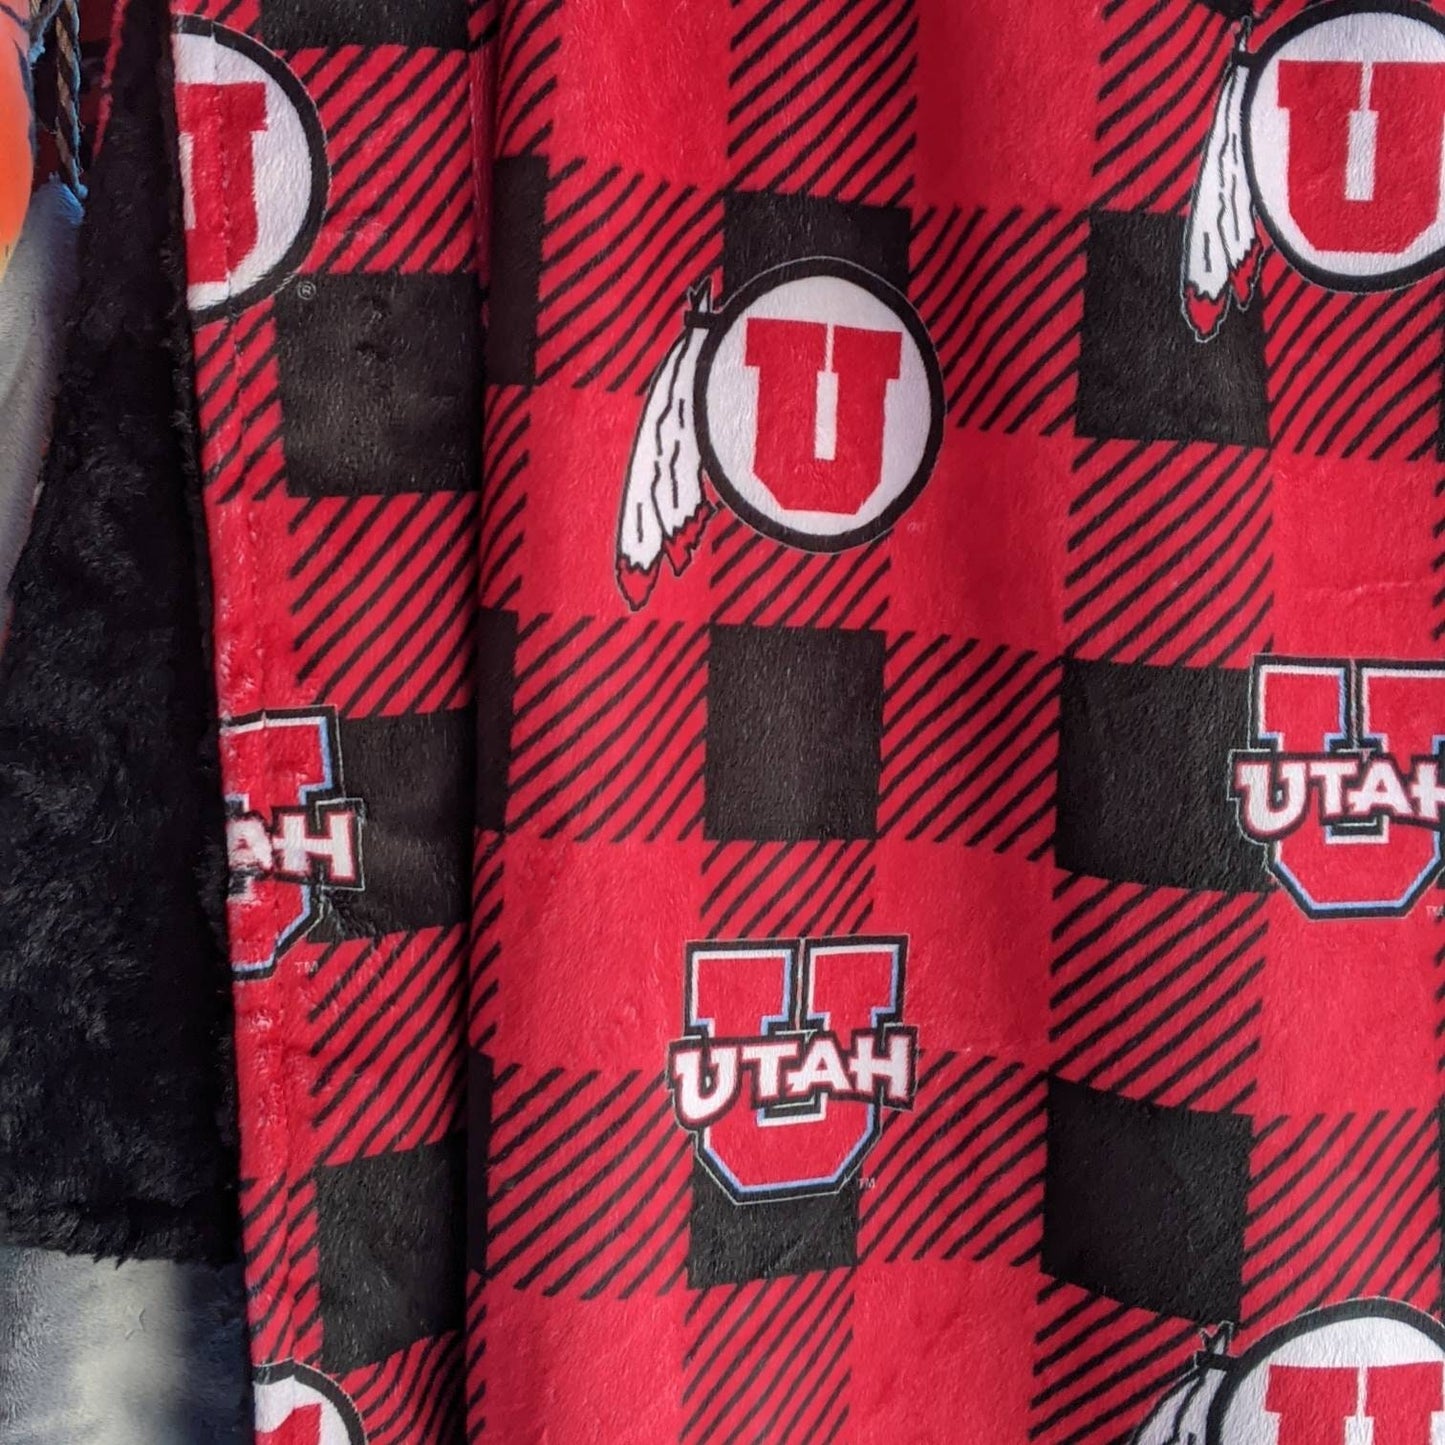 50"x 60" minky University of Utah blanket (other sizes available)